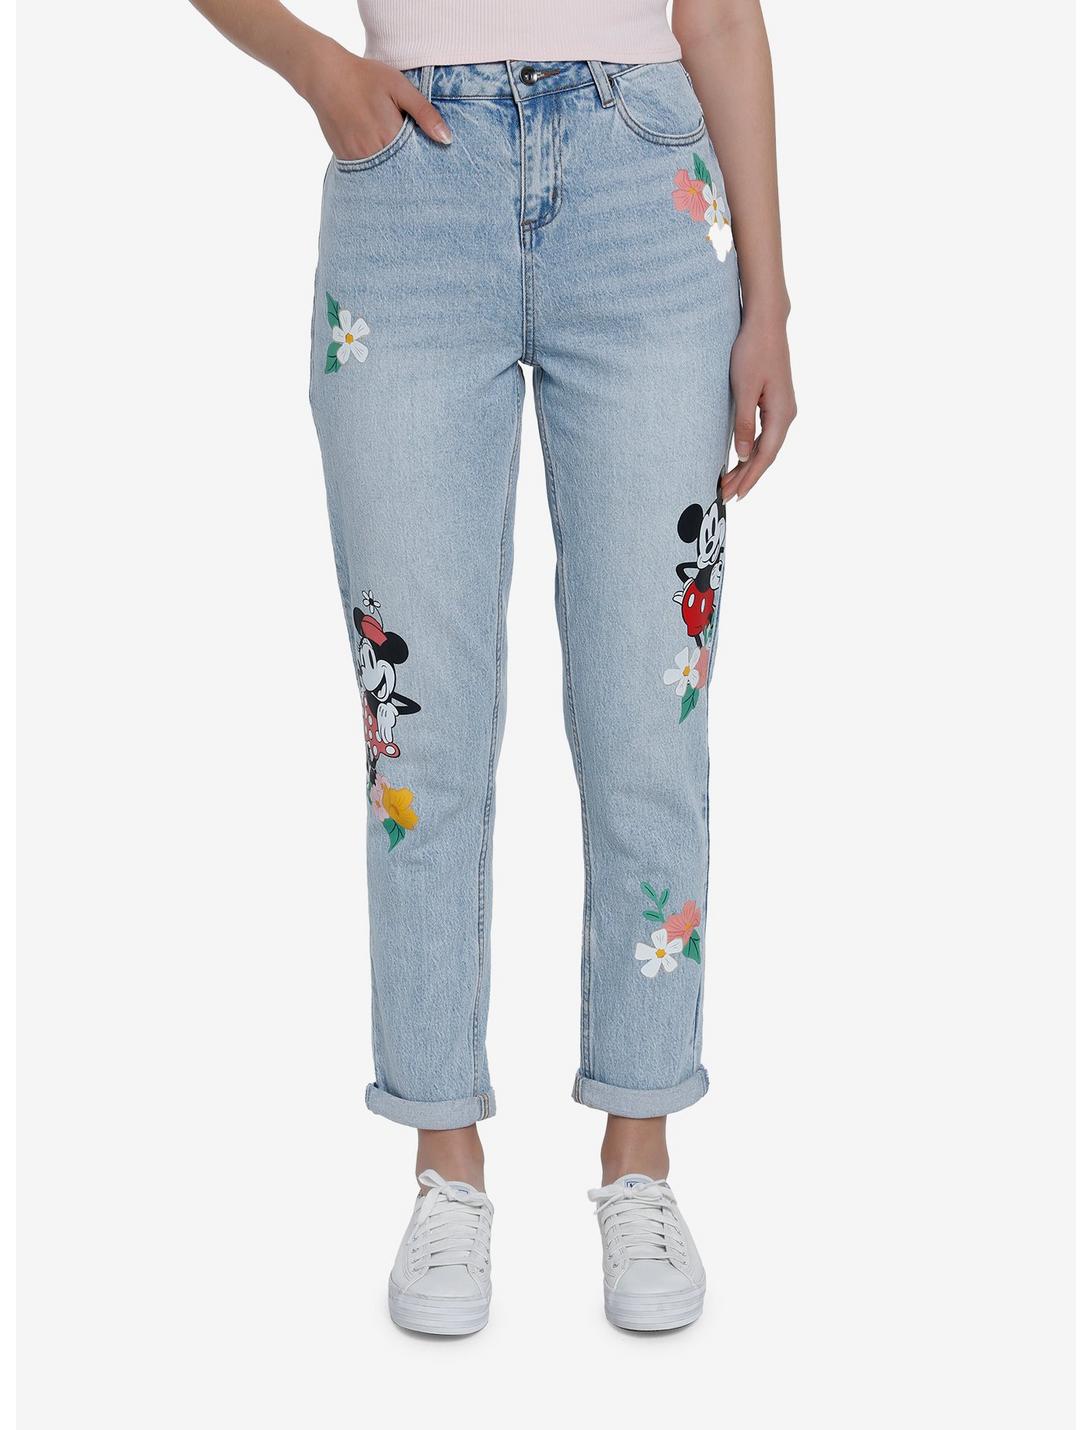 Disney Mickey Mouse Floral Mom Jeans, MEDIUM WASH, hi-res